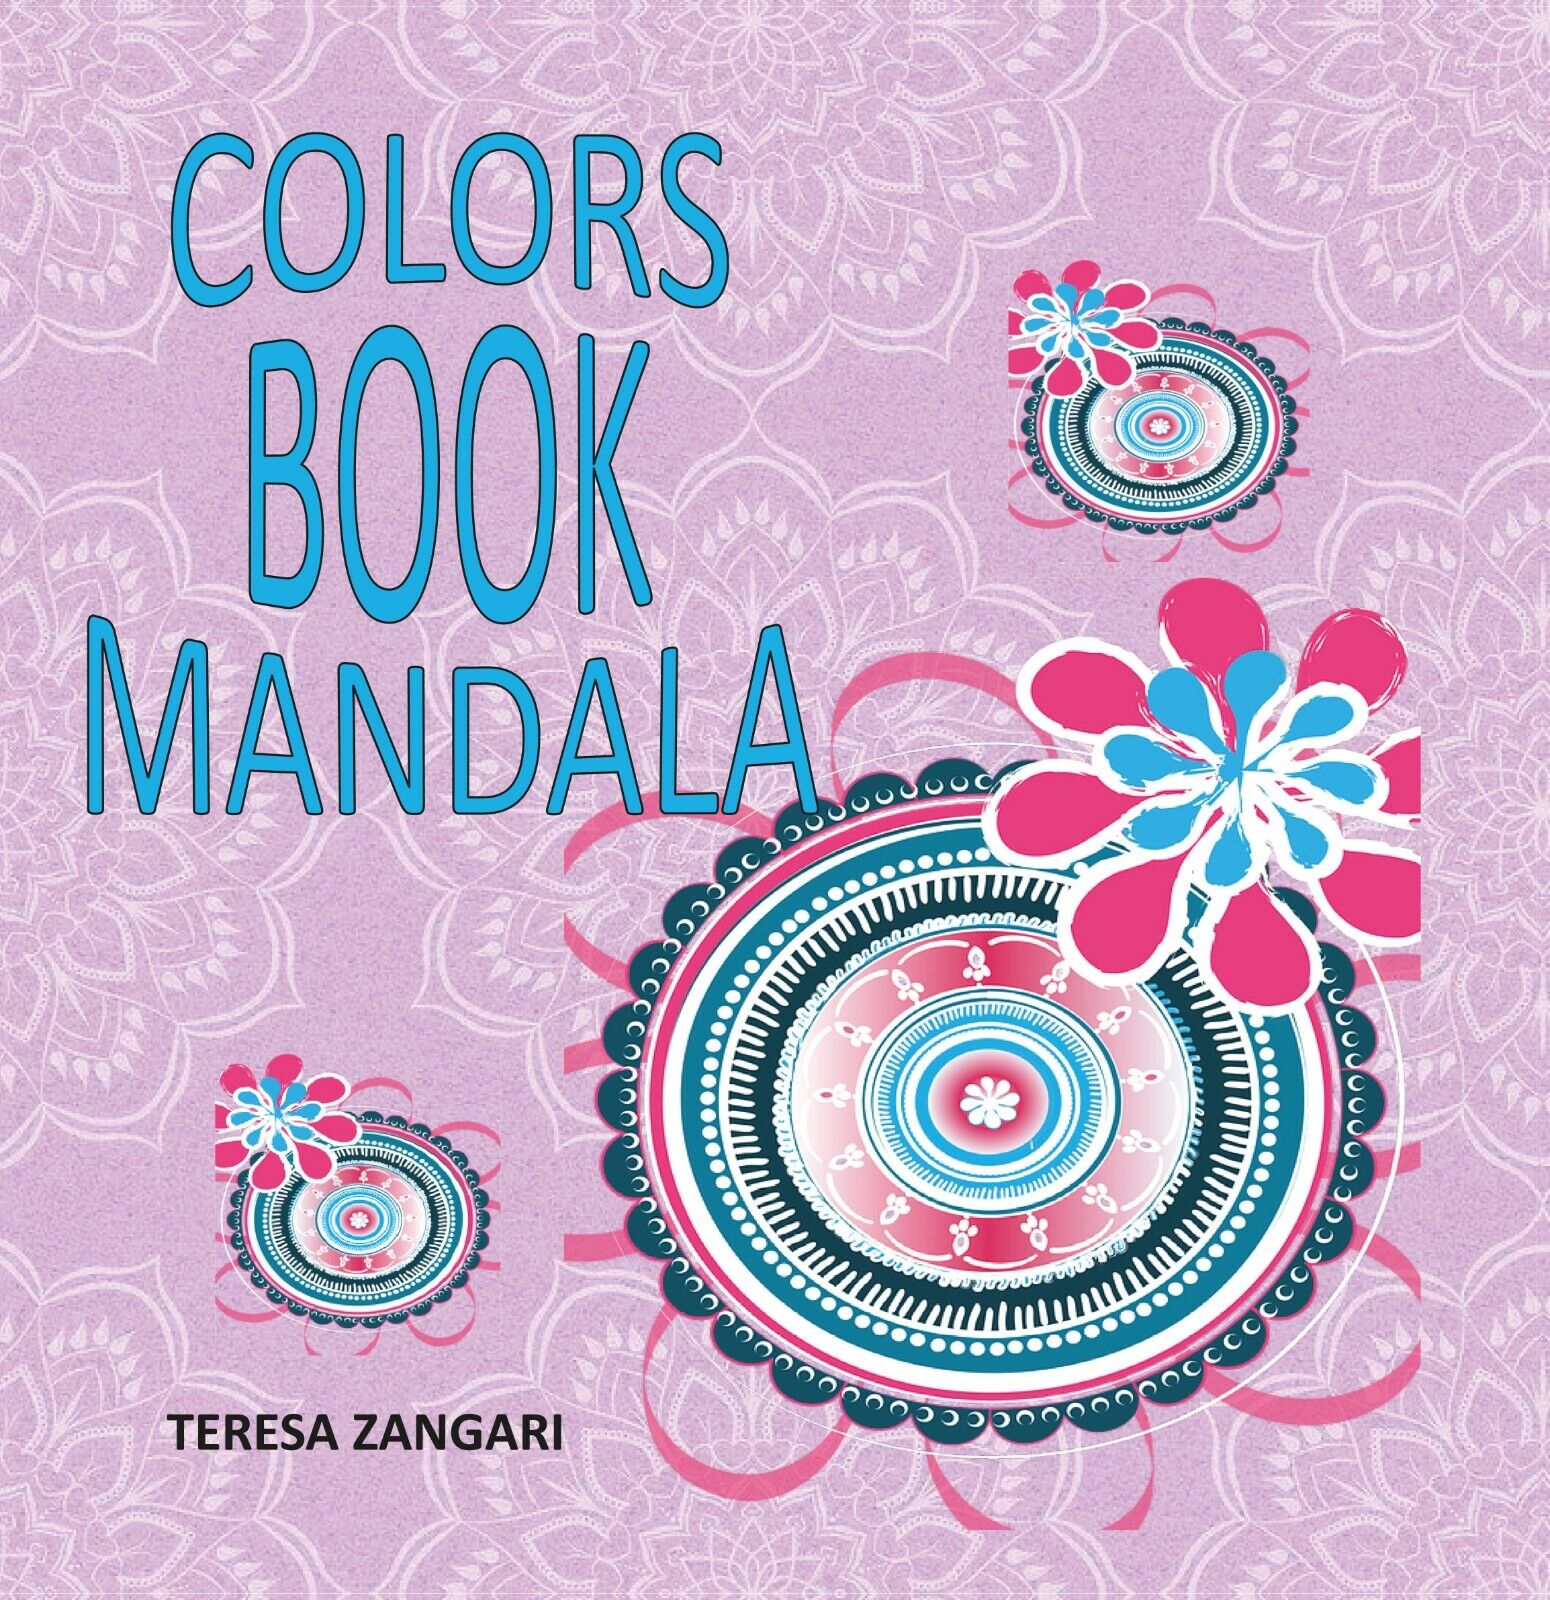 Colors book mandala di Teresa Zangari,  2020,  Youcanprint libro usato